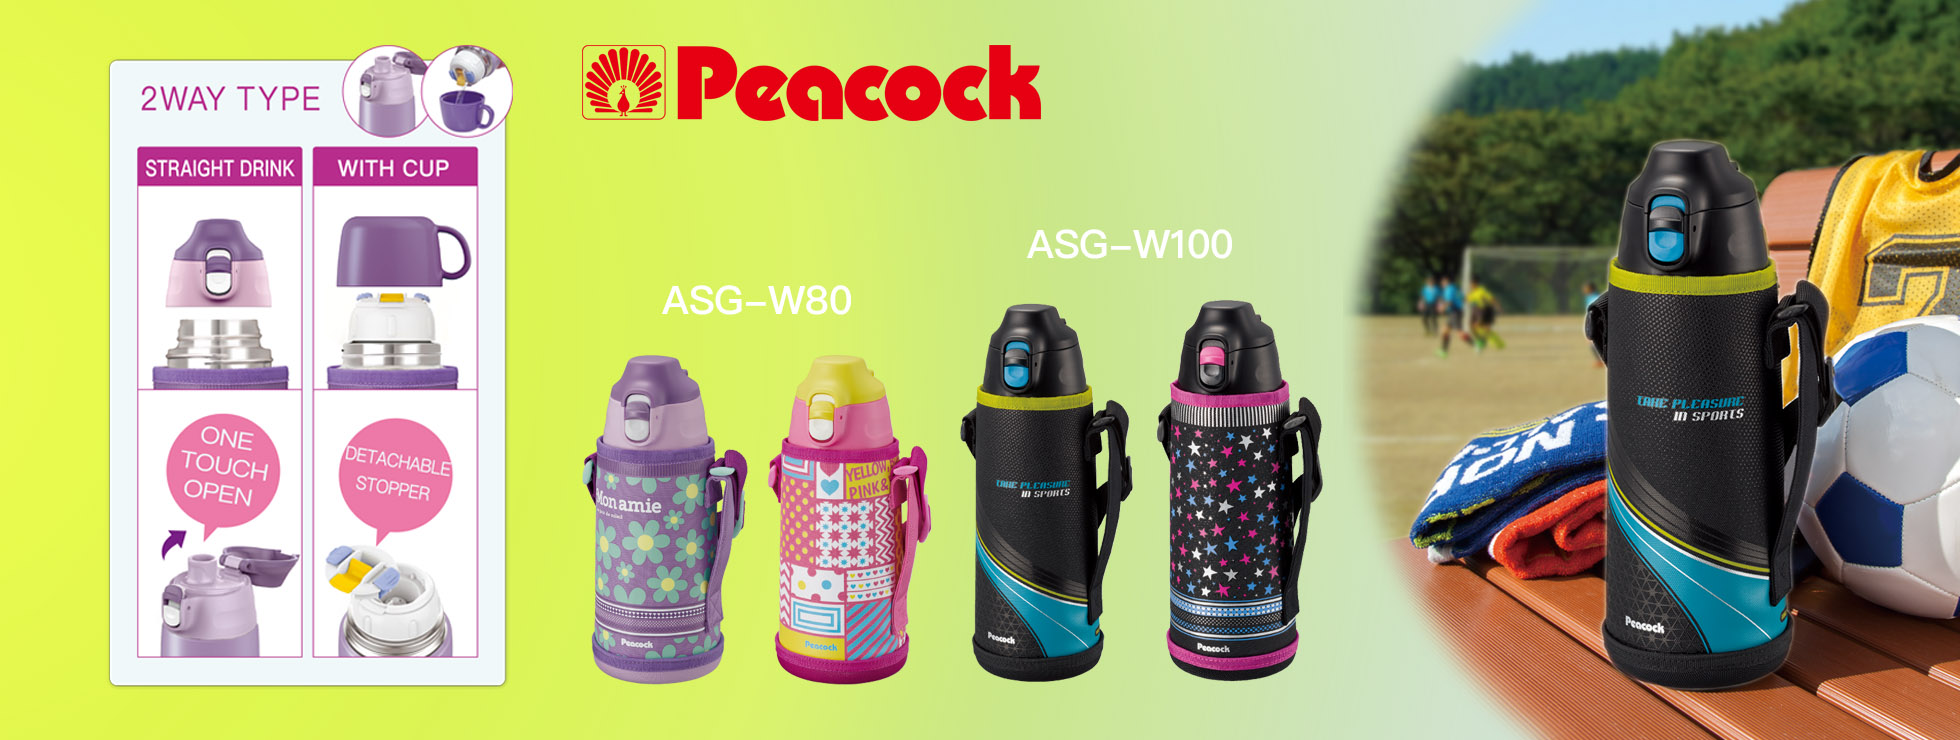 The Peacock Vacuum Bottle